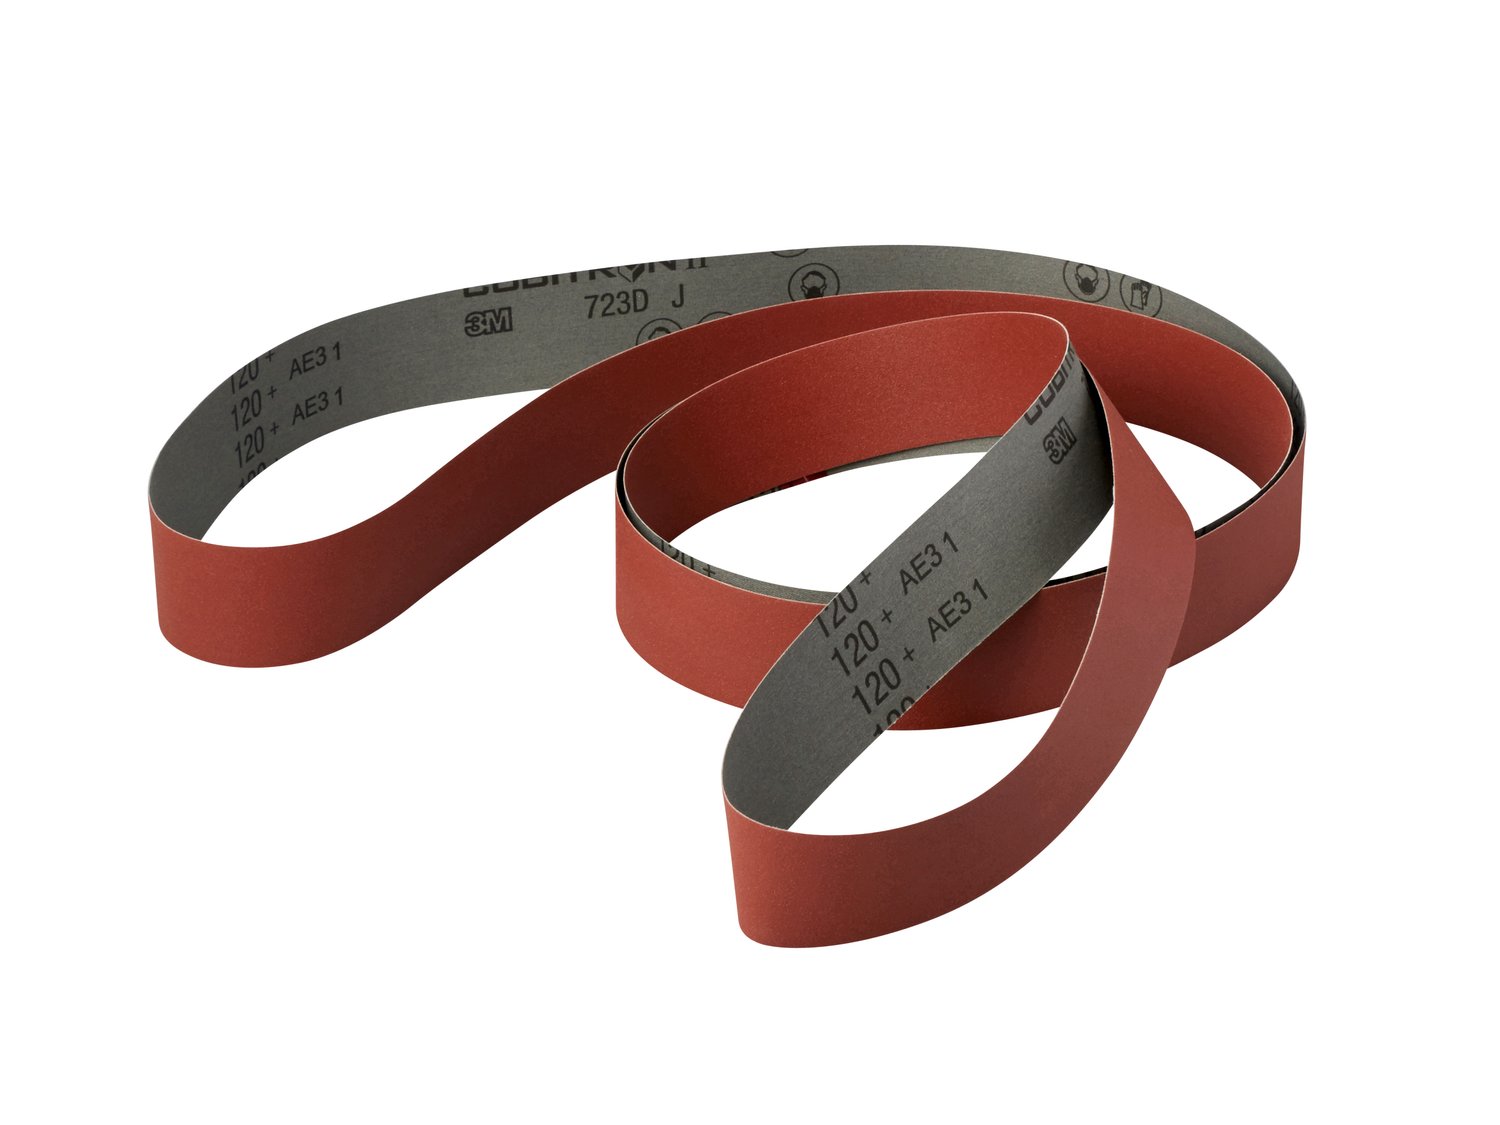 7010512419 - 3M Cubitron ll Cloth Belt 723D, 220+ J-weight, 2 in x 132 in,
Film-lok, Full-flex